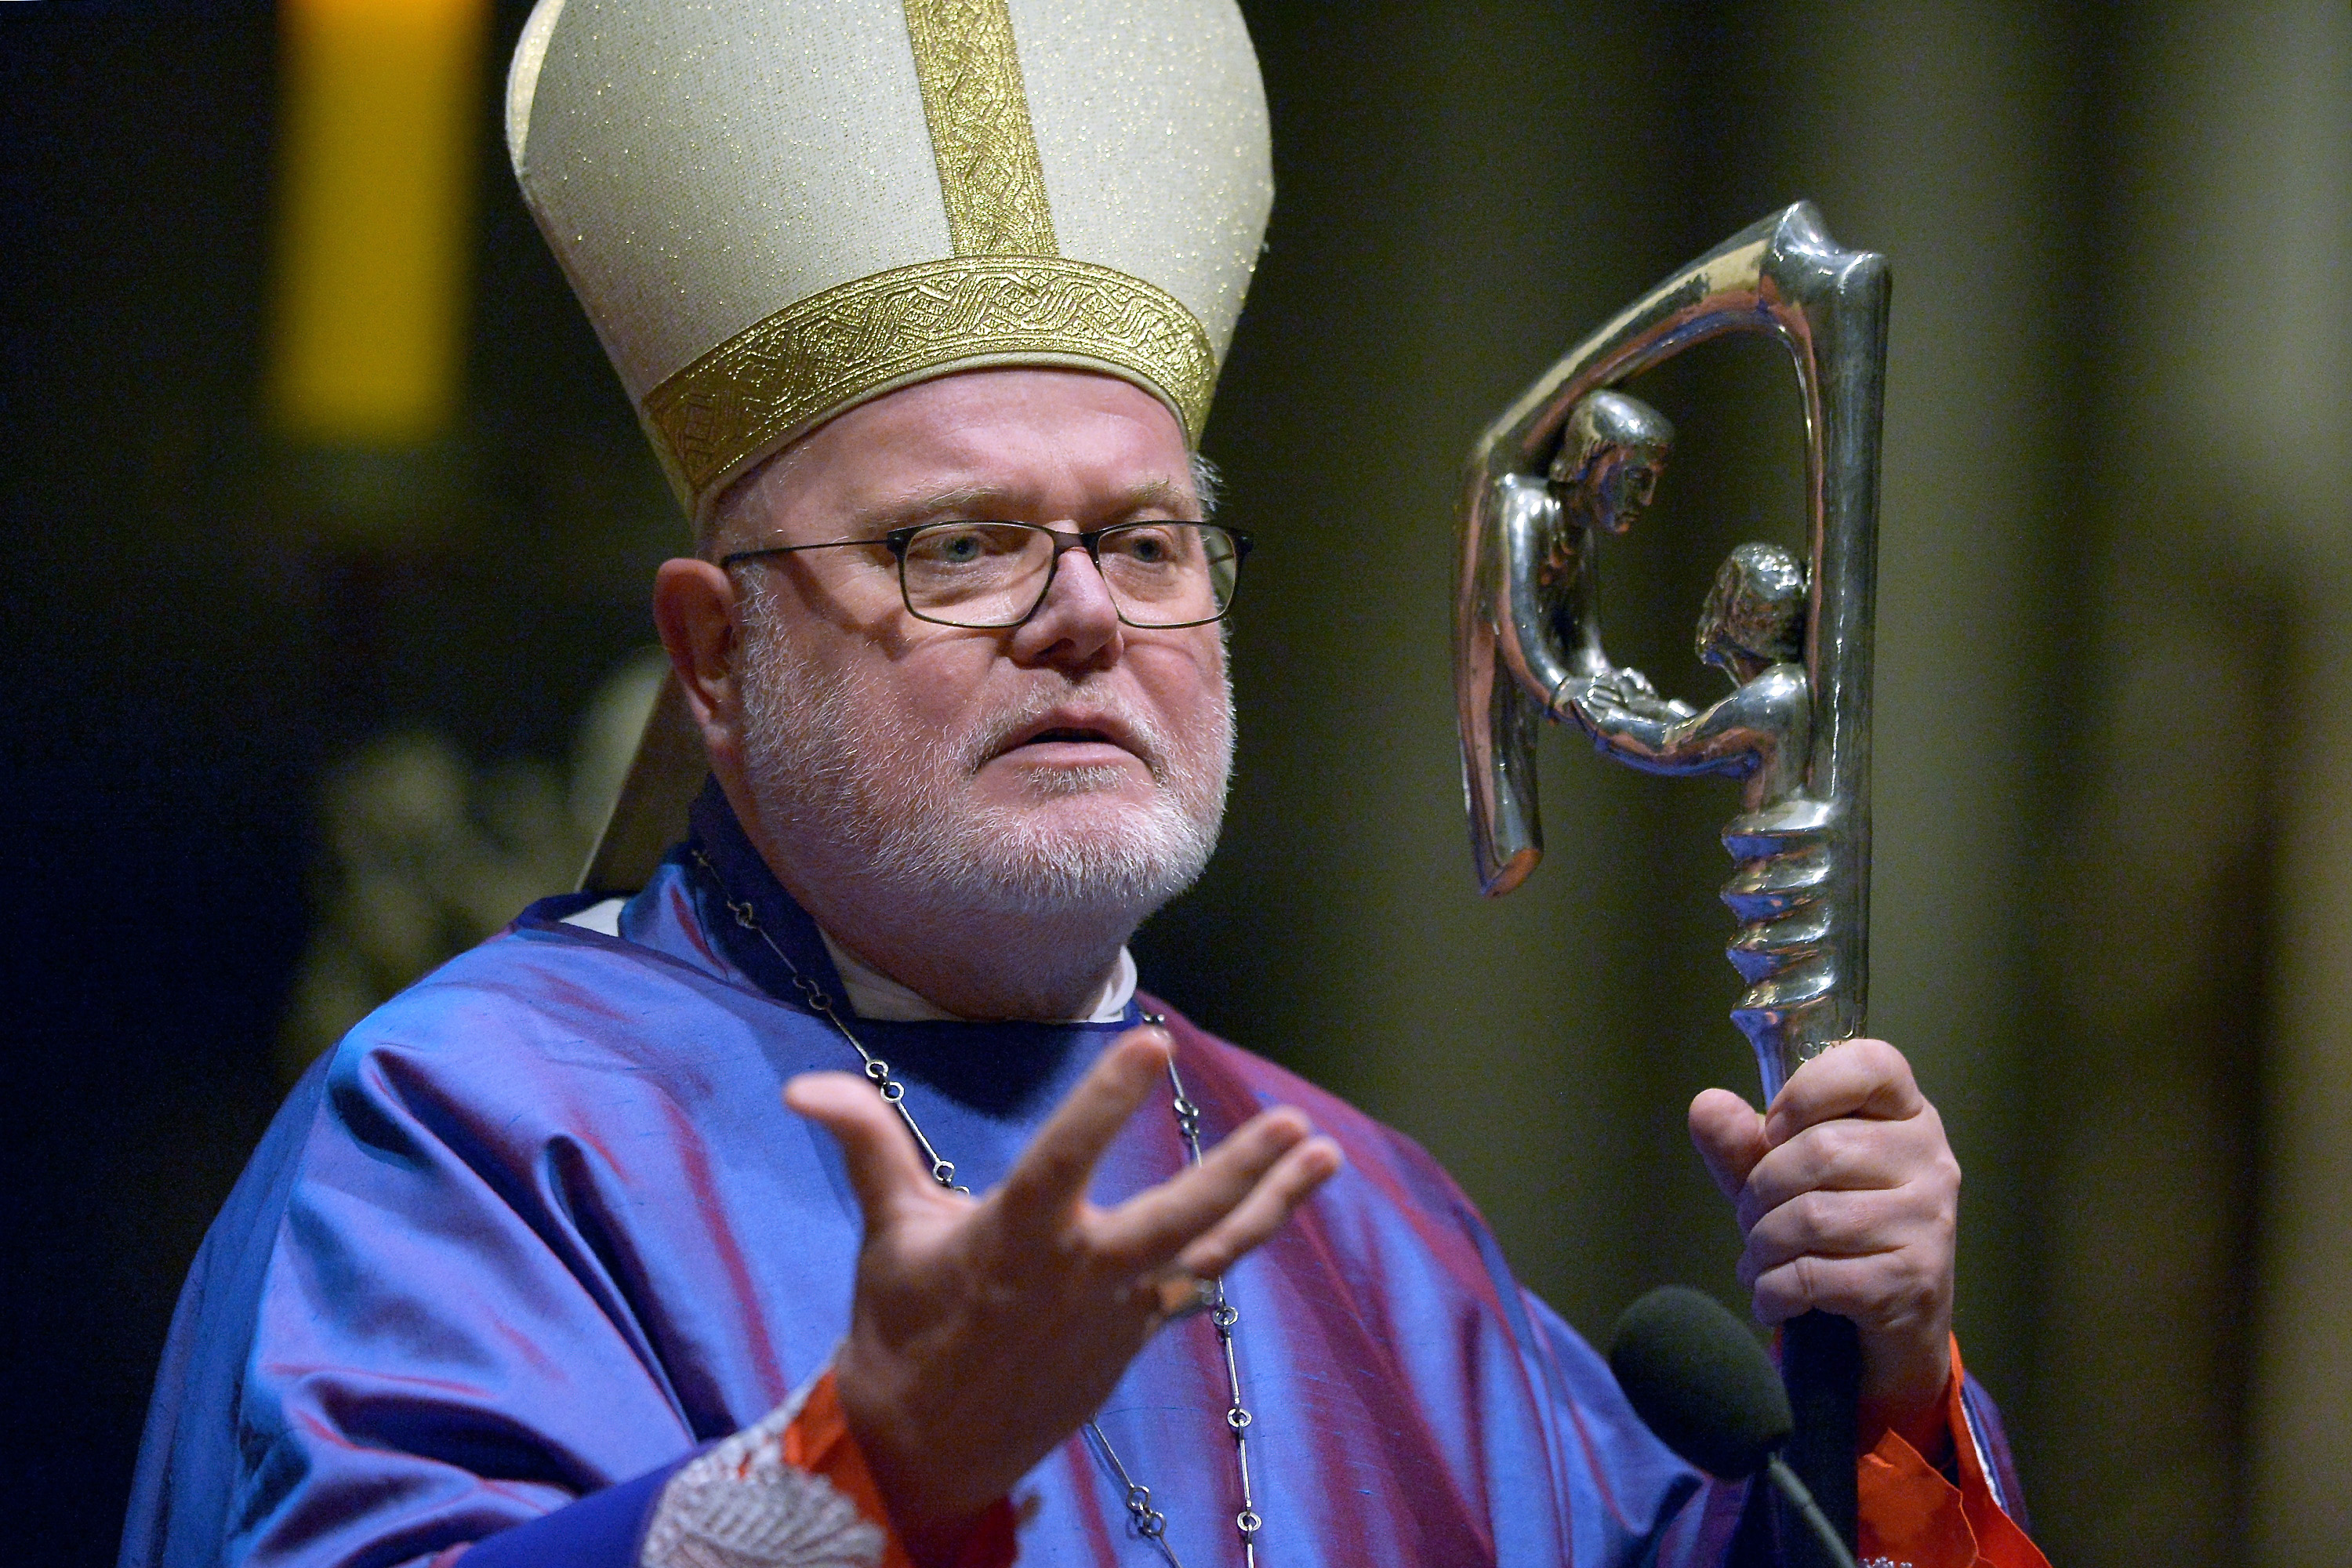 German bishops’ dispute over communion deepens   